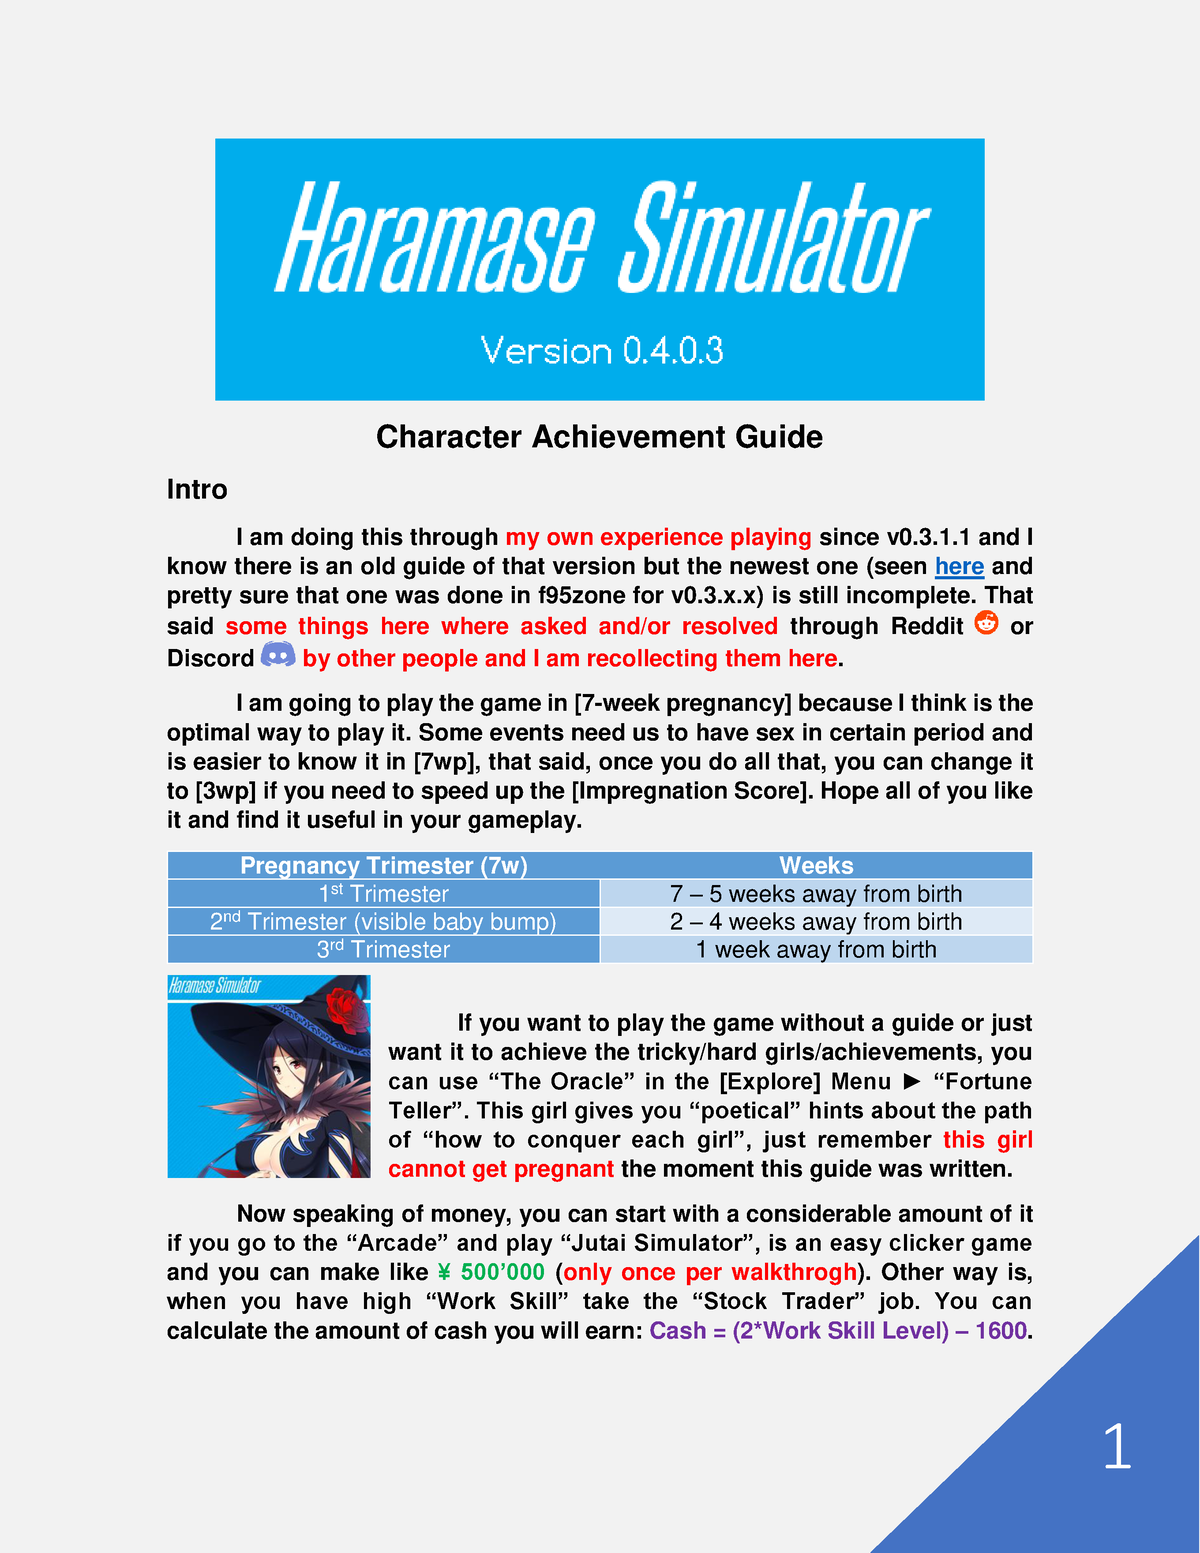 Haramase Simulator Character Achievement Guide For V0 4 0 3 V1 Character Achievement Guide 